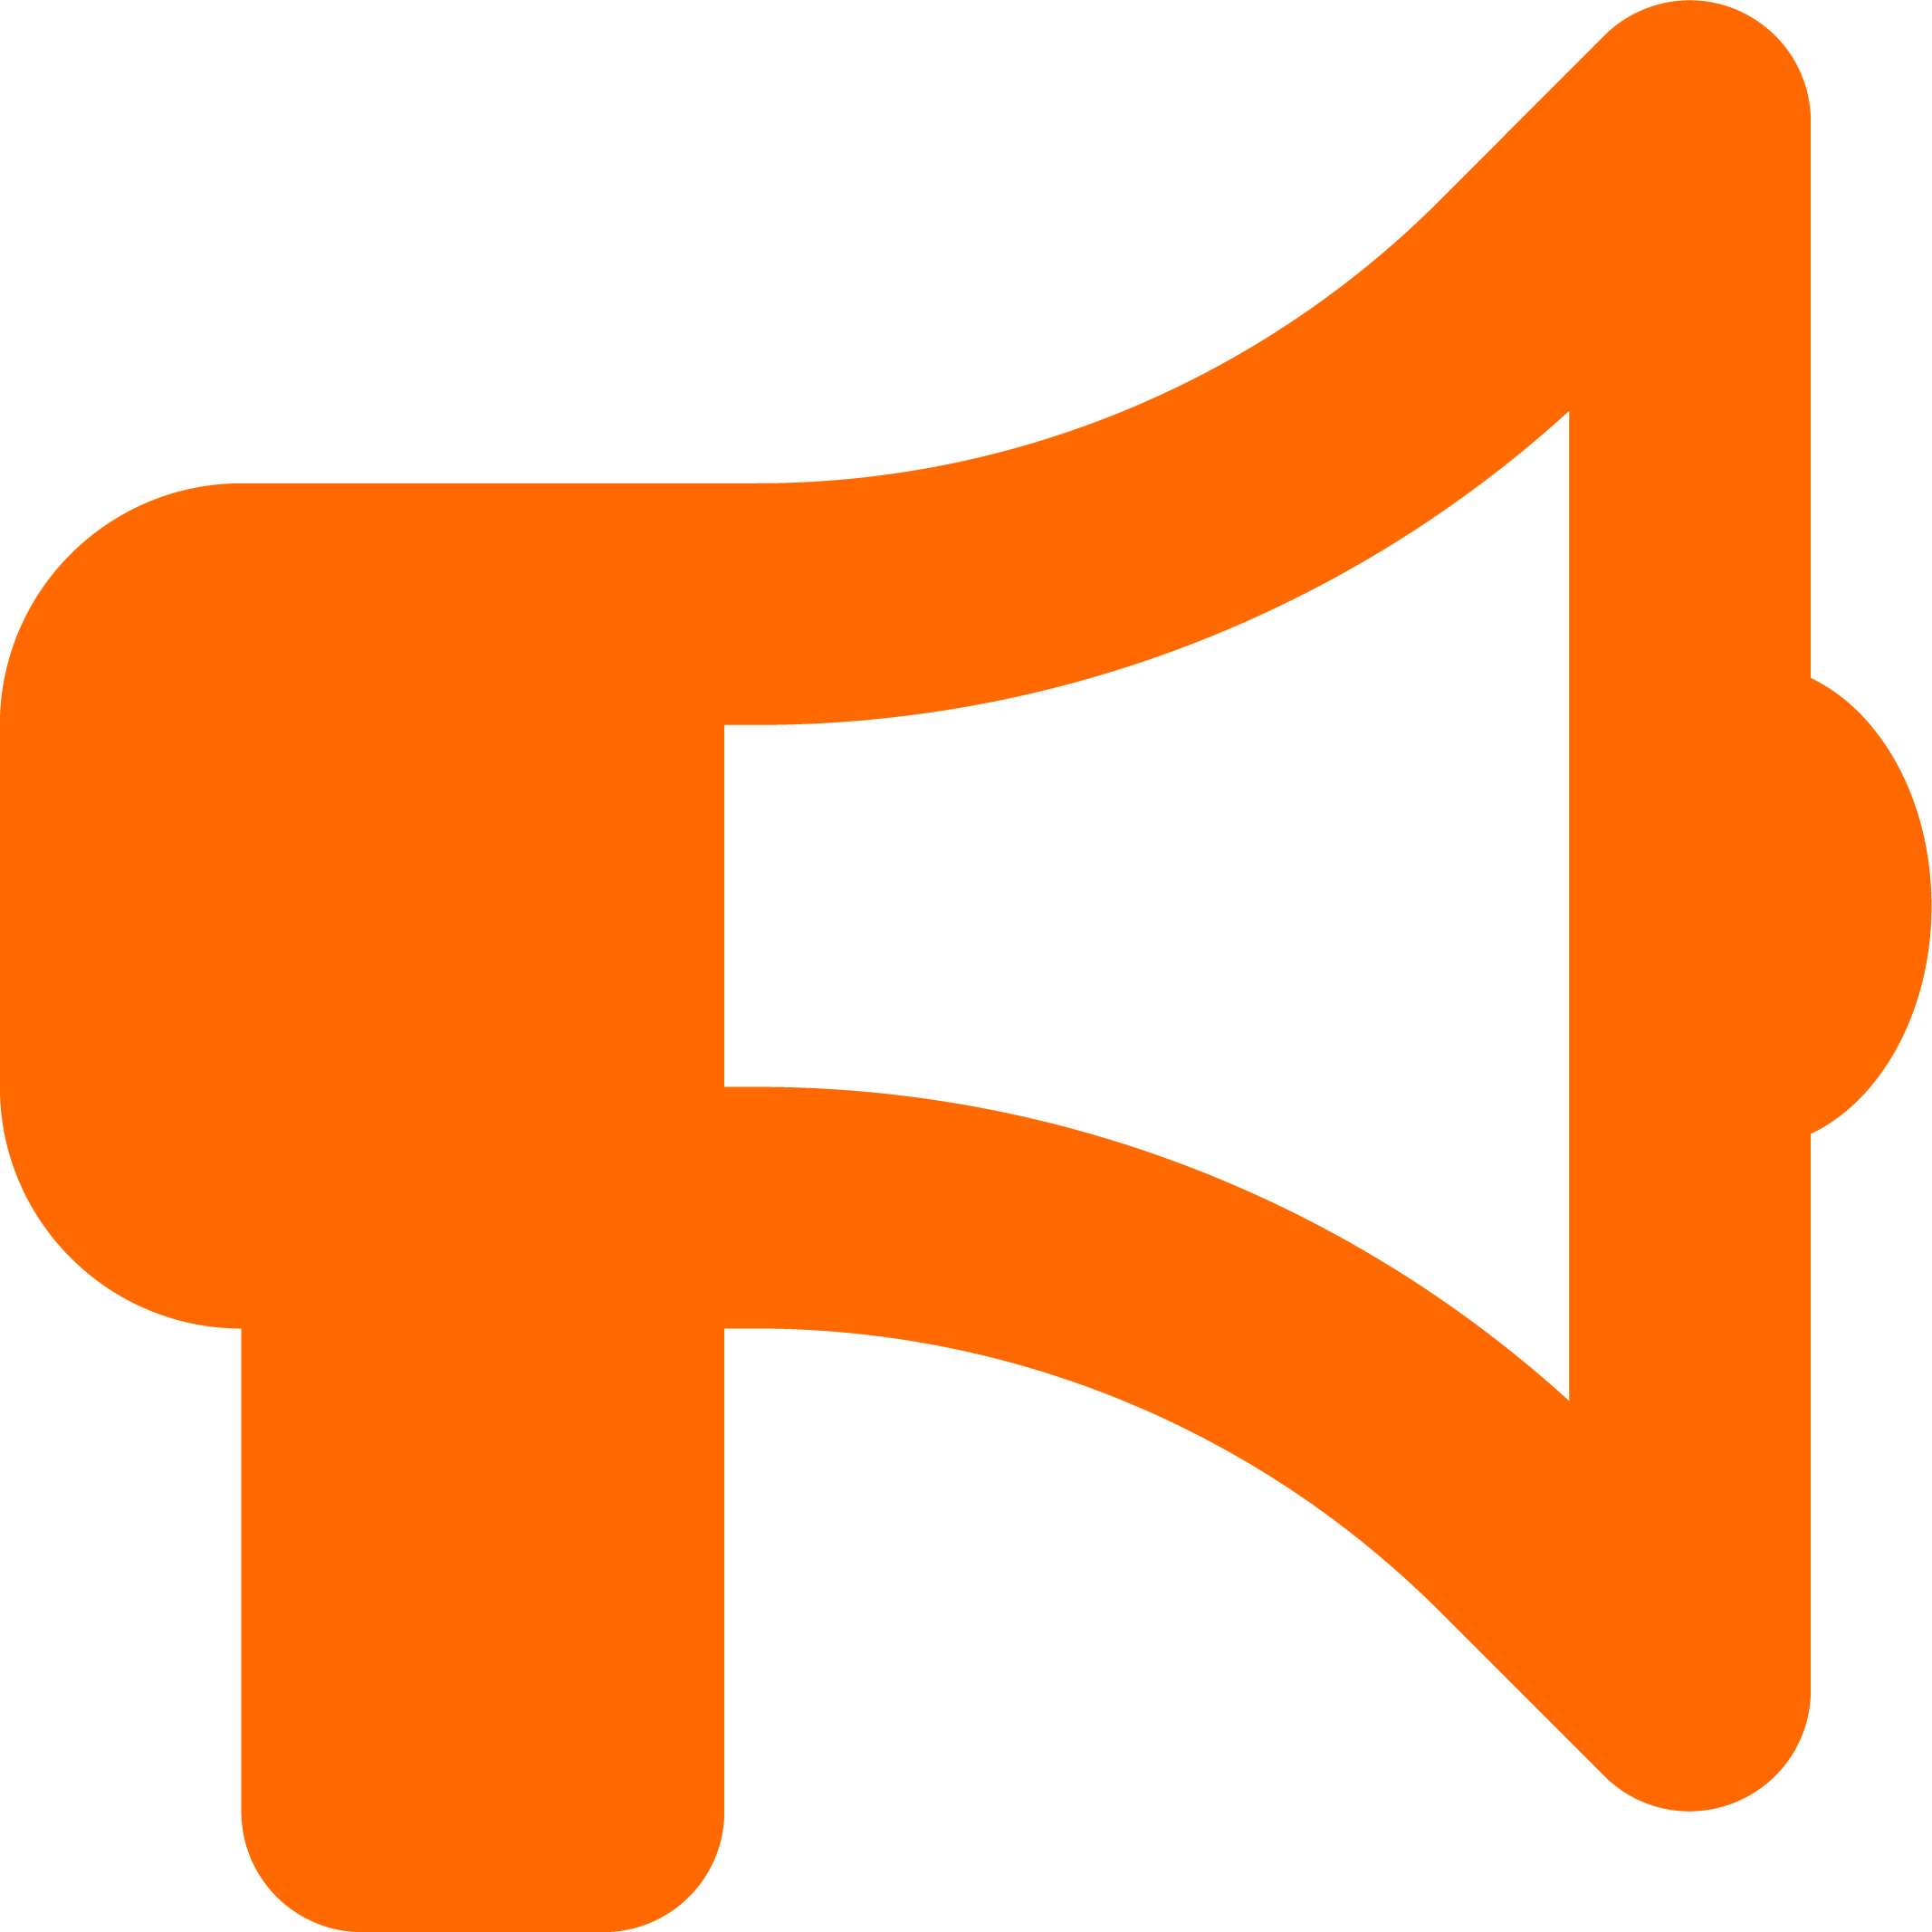 Orange bullhorn icon